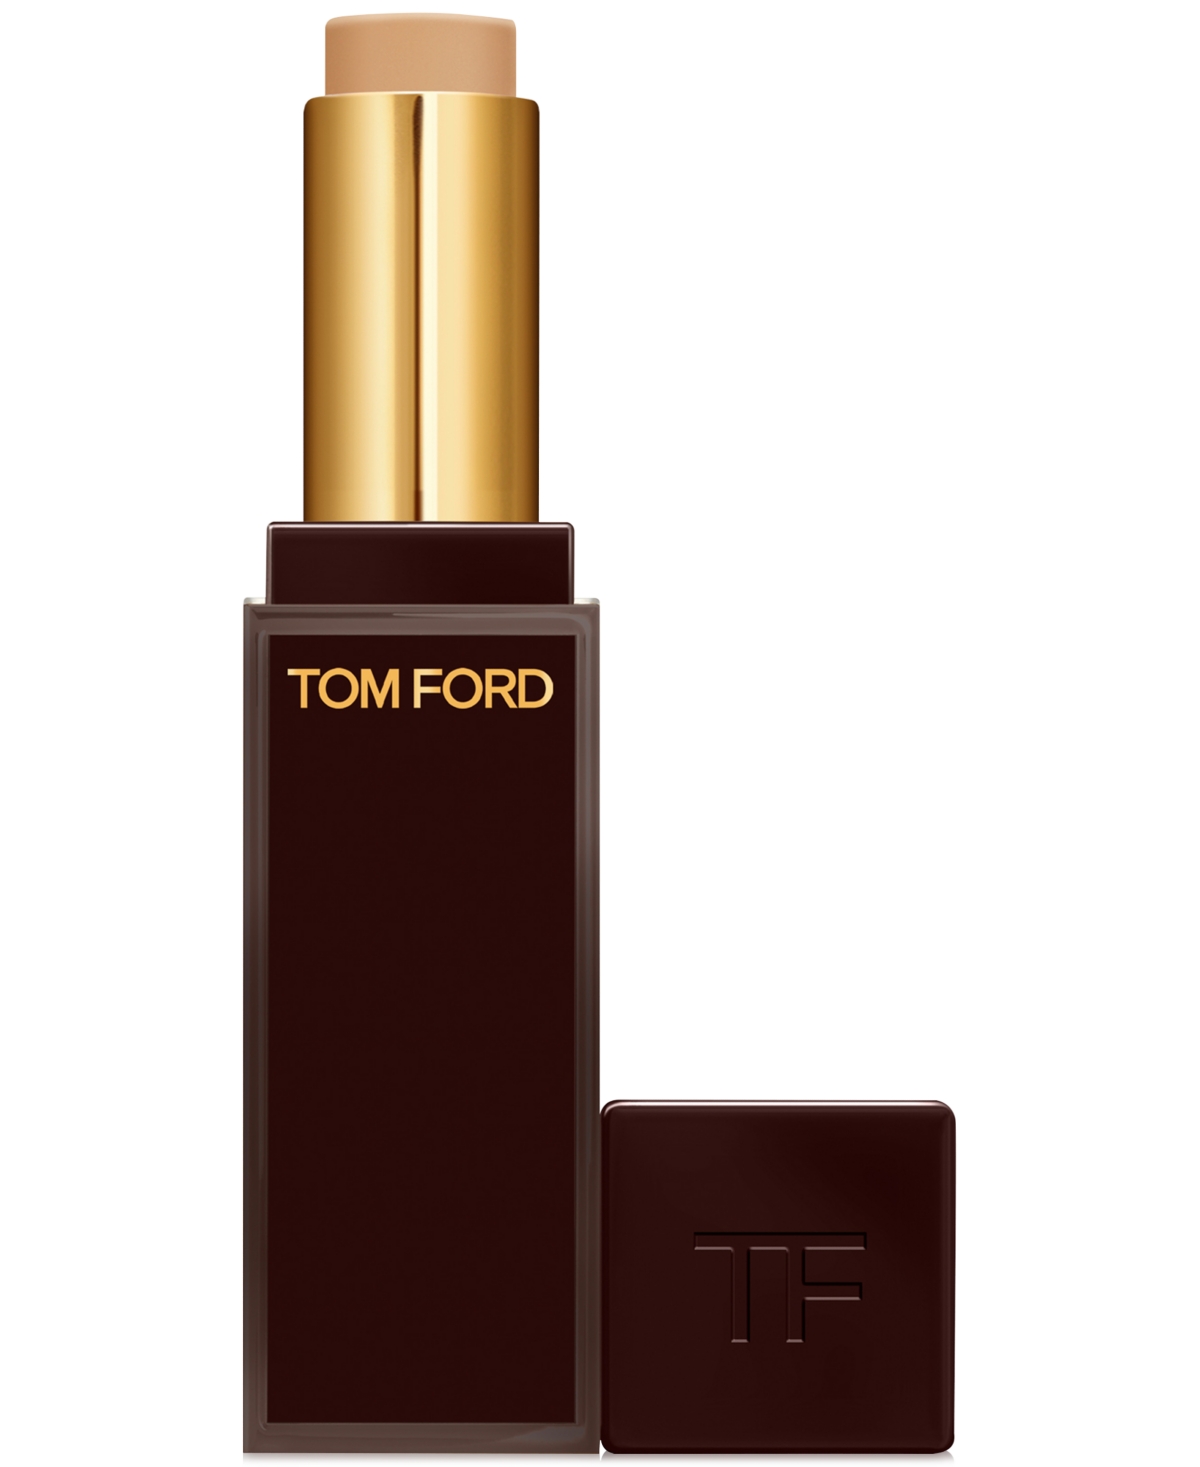 Tom Ford Traceless Soft Matte Concealer In W Golden (medium Skin With Golden Undert